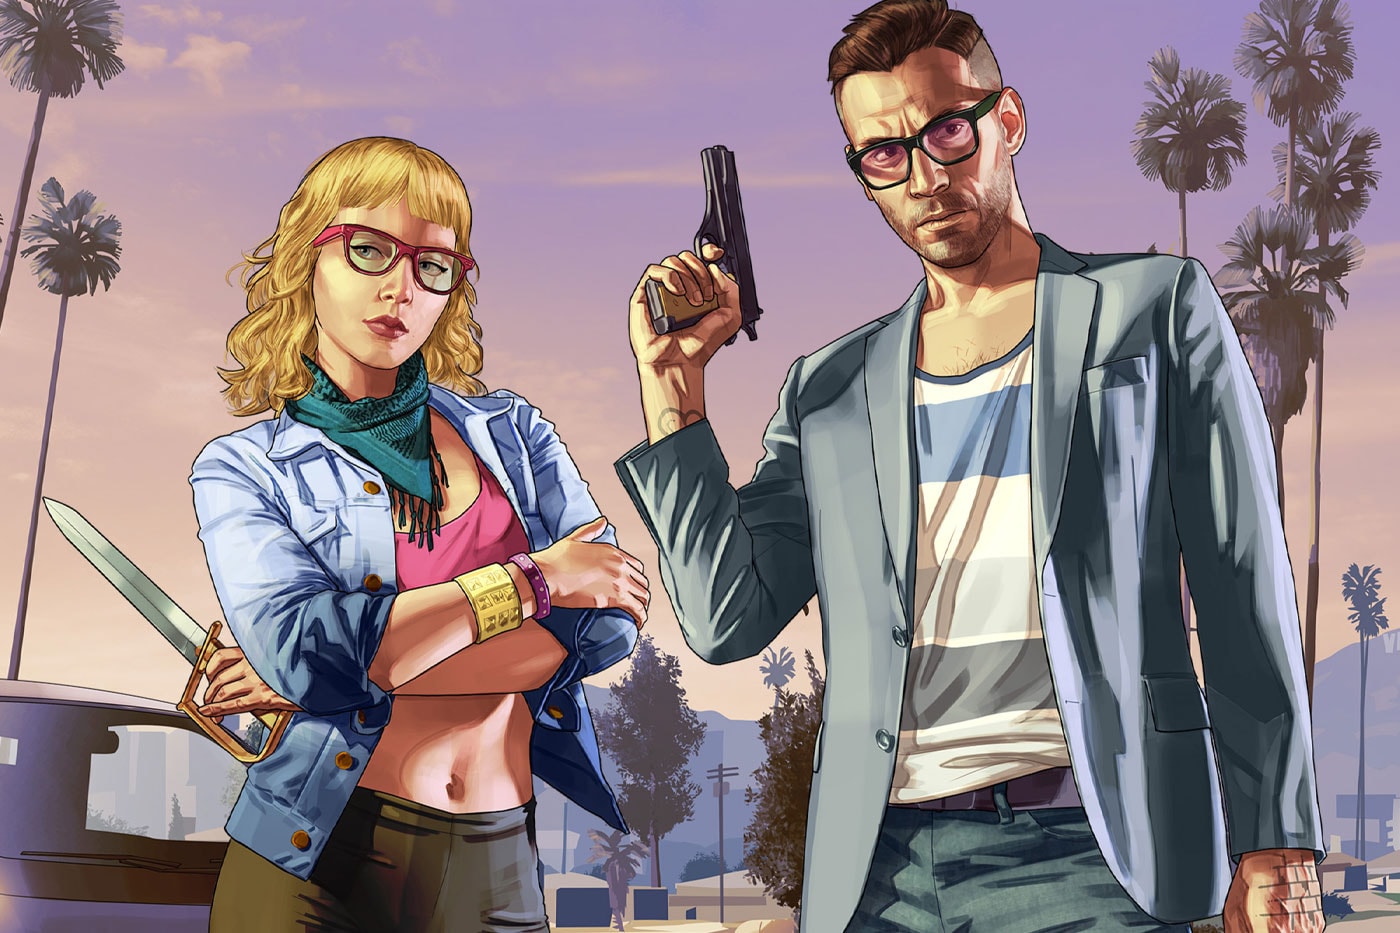 Grand Theft Auto 6' Leak Won't Influence Development